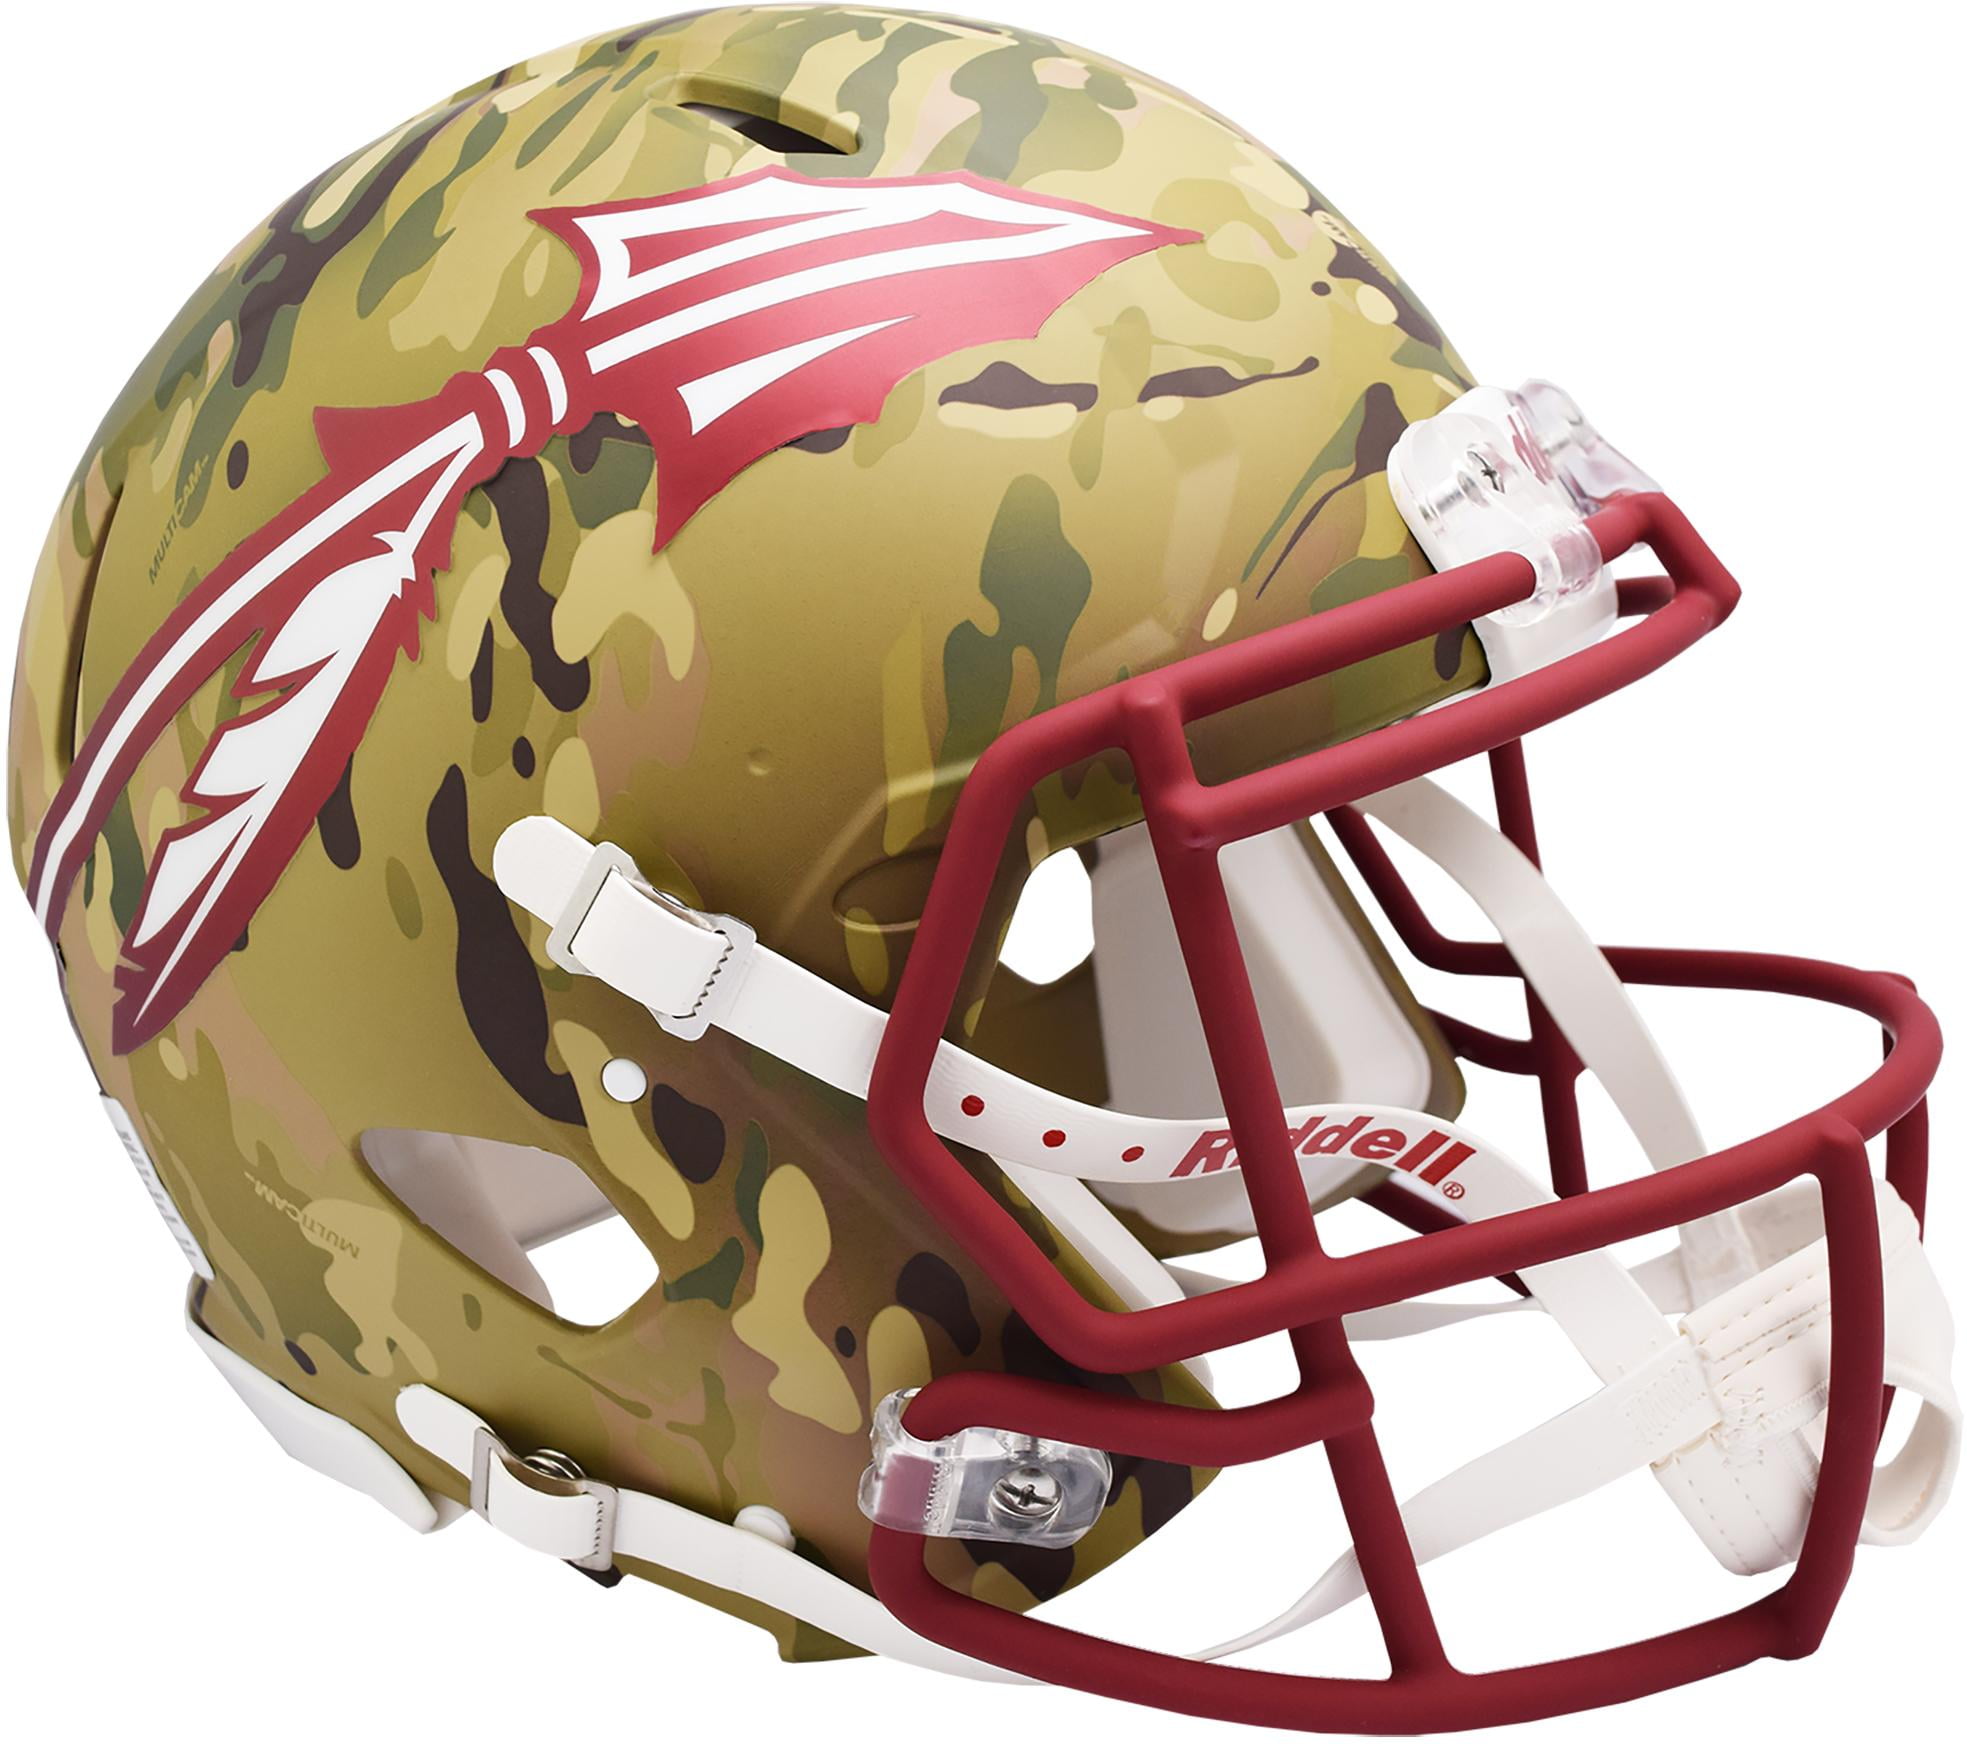 New in Riddell Box FSU Florida State Seminoles Eclipse Alternate Speed Riddell Mini Football Helmet 